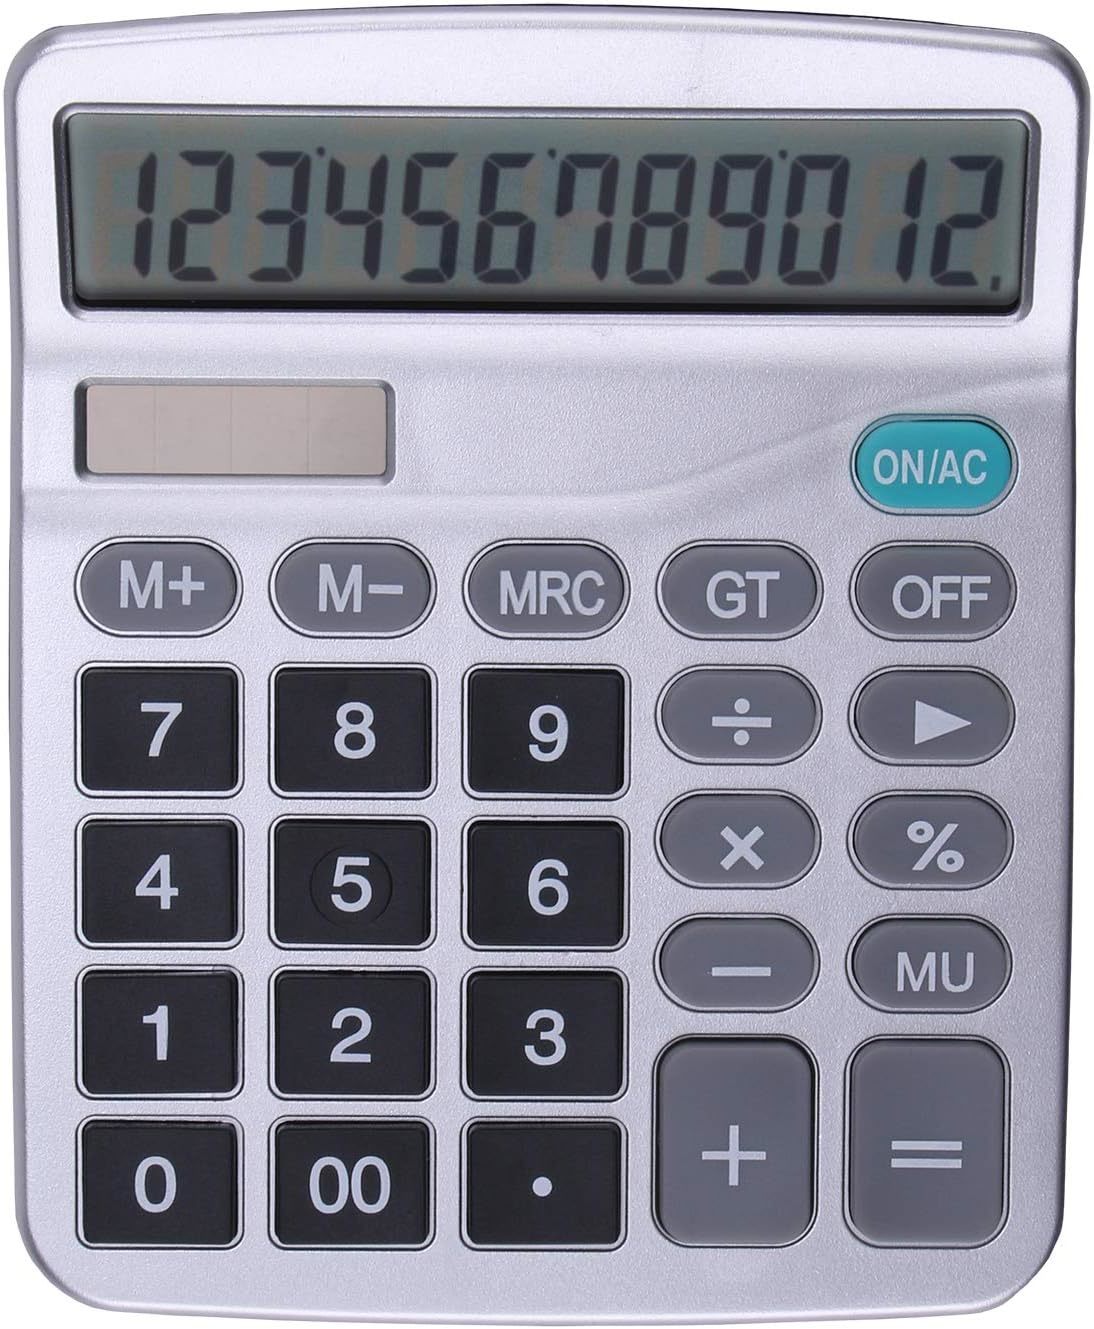 Lichamp　Office　Desk　Desktop　Calculators,　and　similar　items